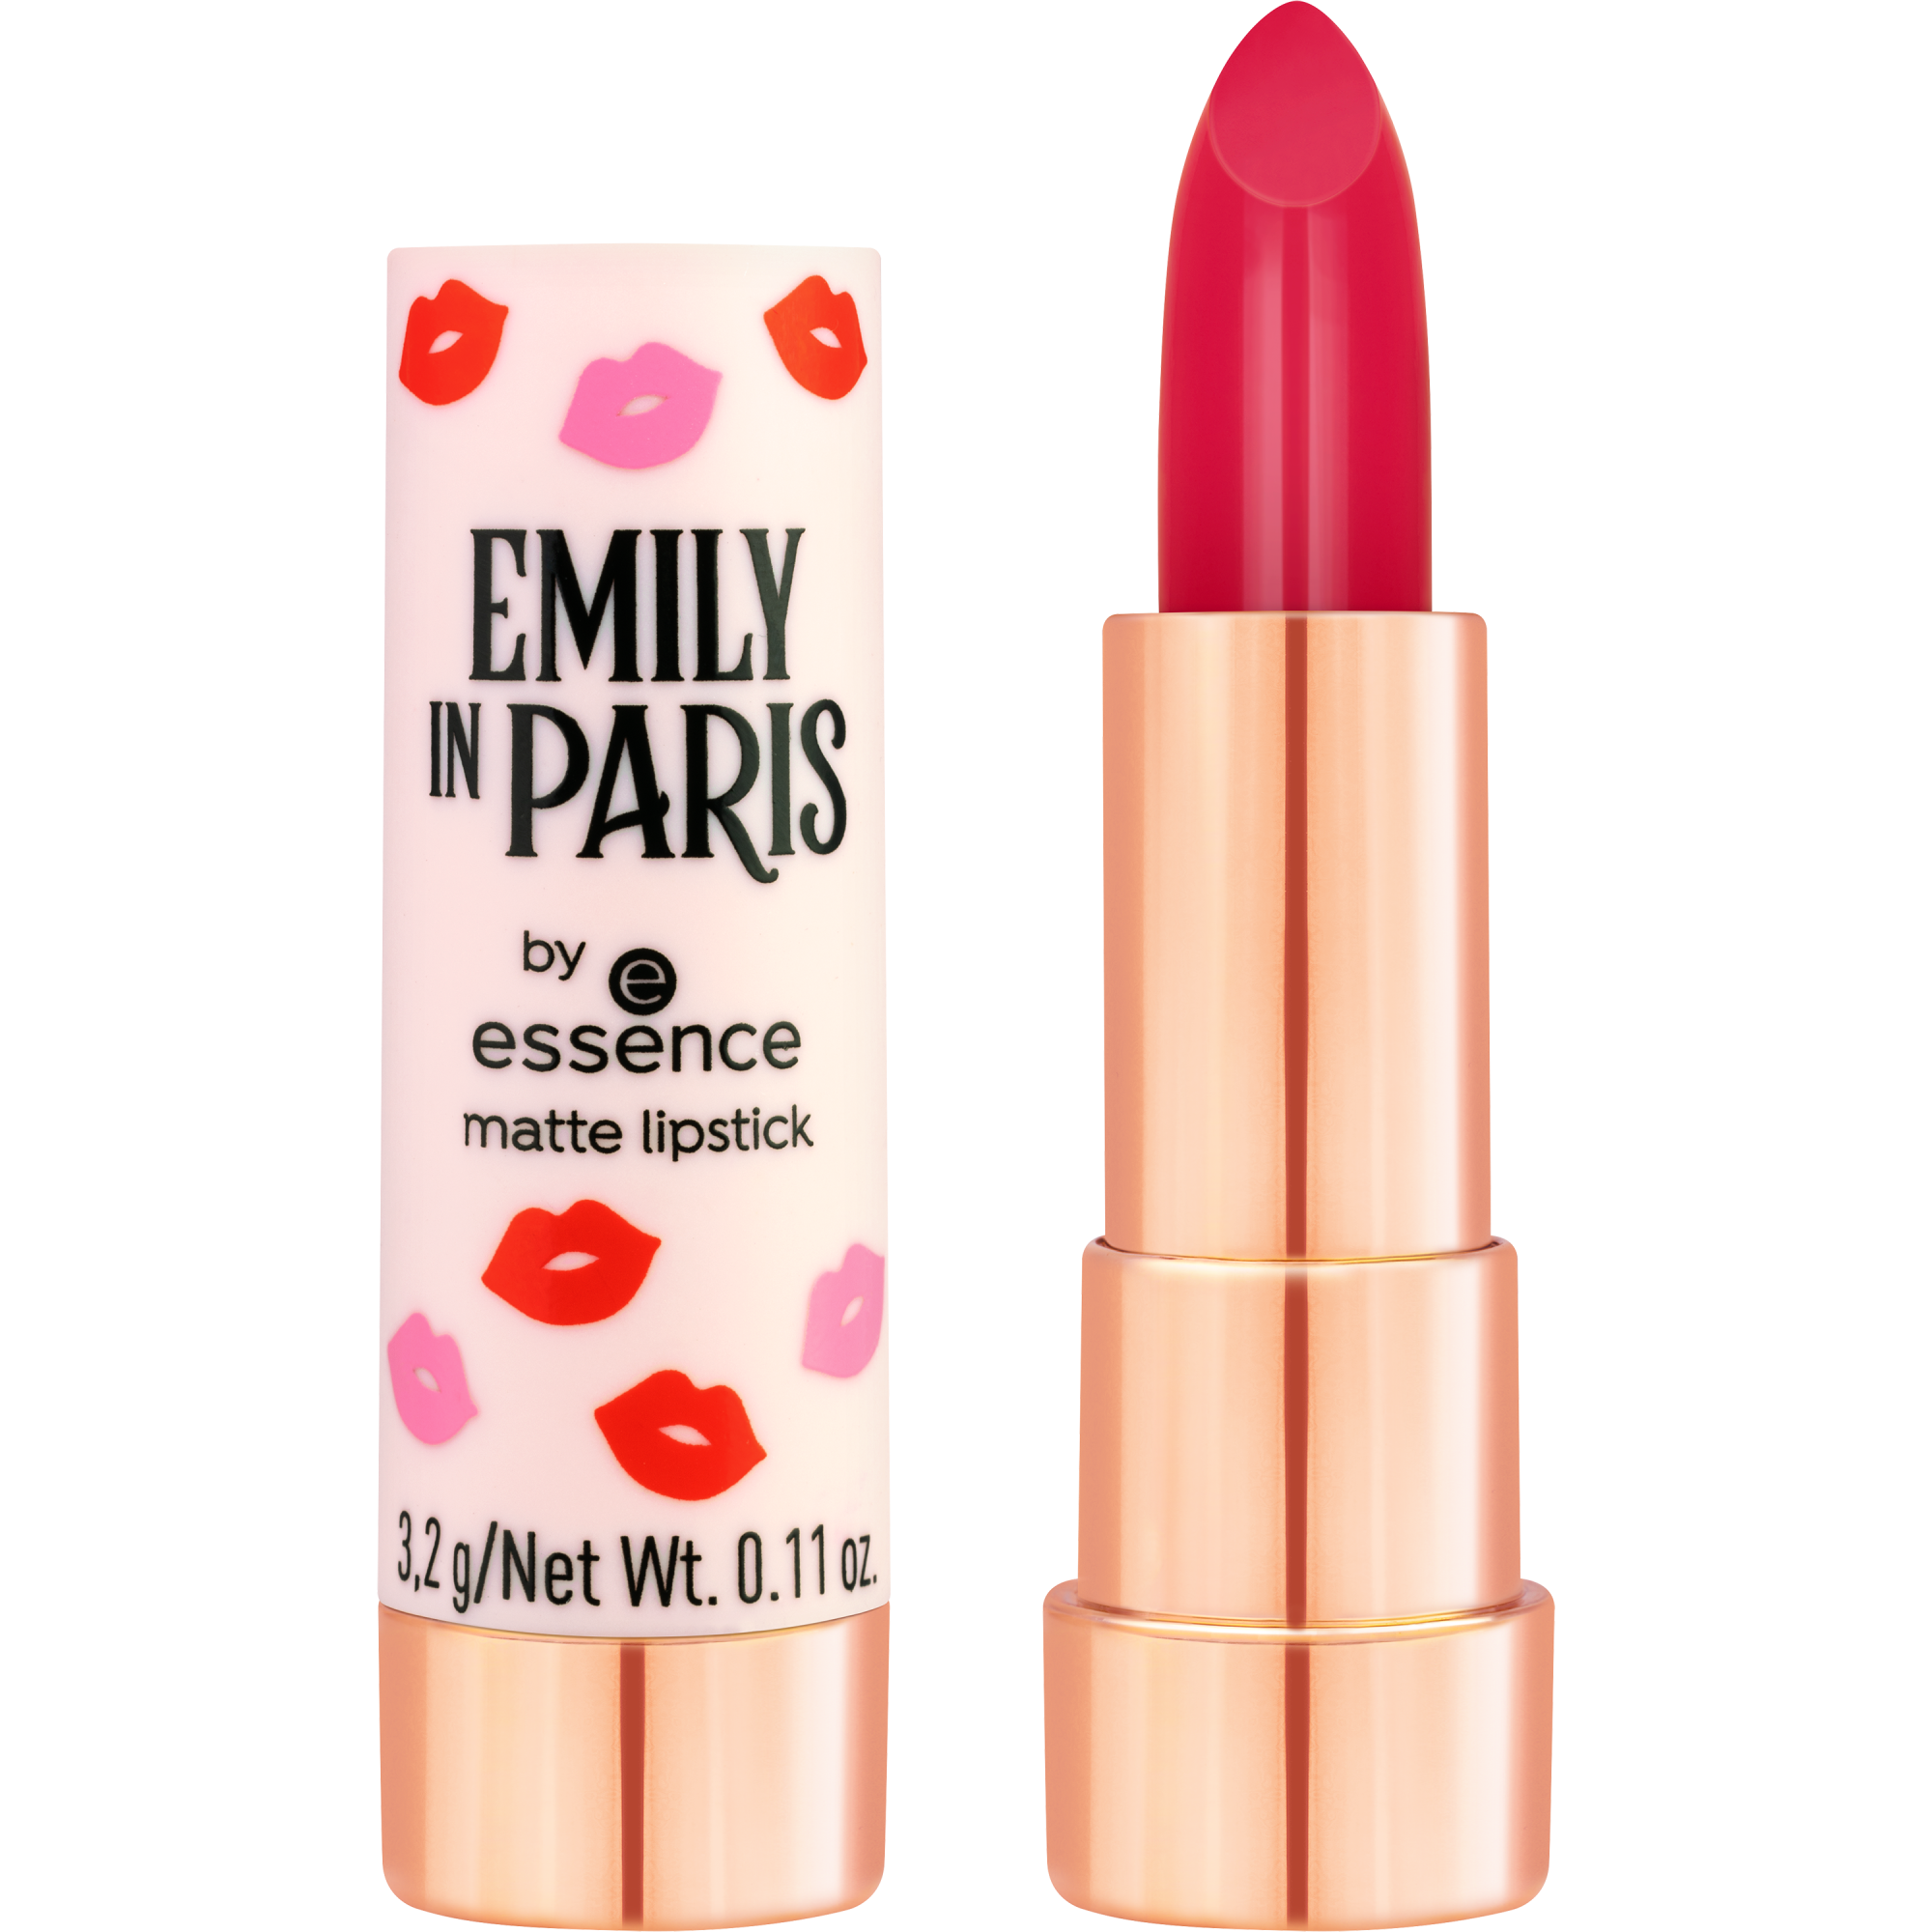 essence EMILY IN PARIS by essence matte lipstick